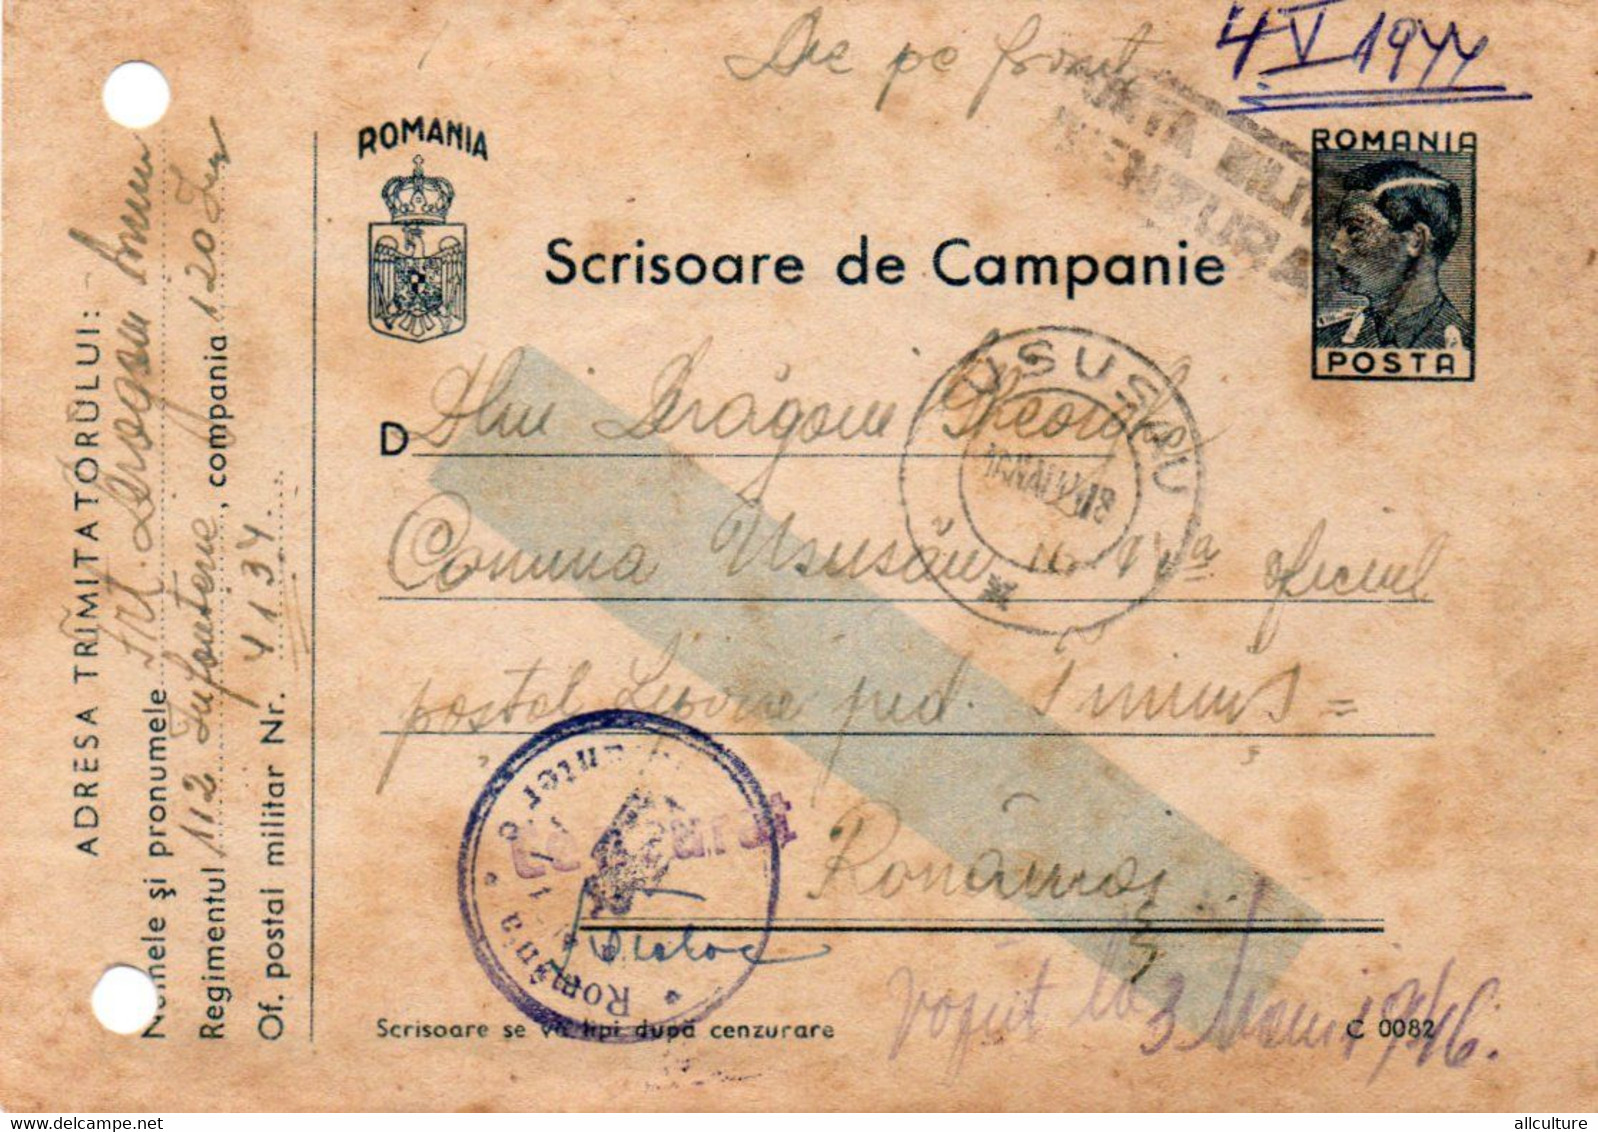 A52,A53 - 2 SCRISOARI DE CAMPANIE 2 LETTERS-SHEET IN BLUE ILUSTRATED  24.03. 1944,4 MAI 1944 WW2 STATIONERY ROMANIA USED - 2. Weltkrieg (Briefe)